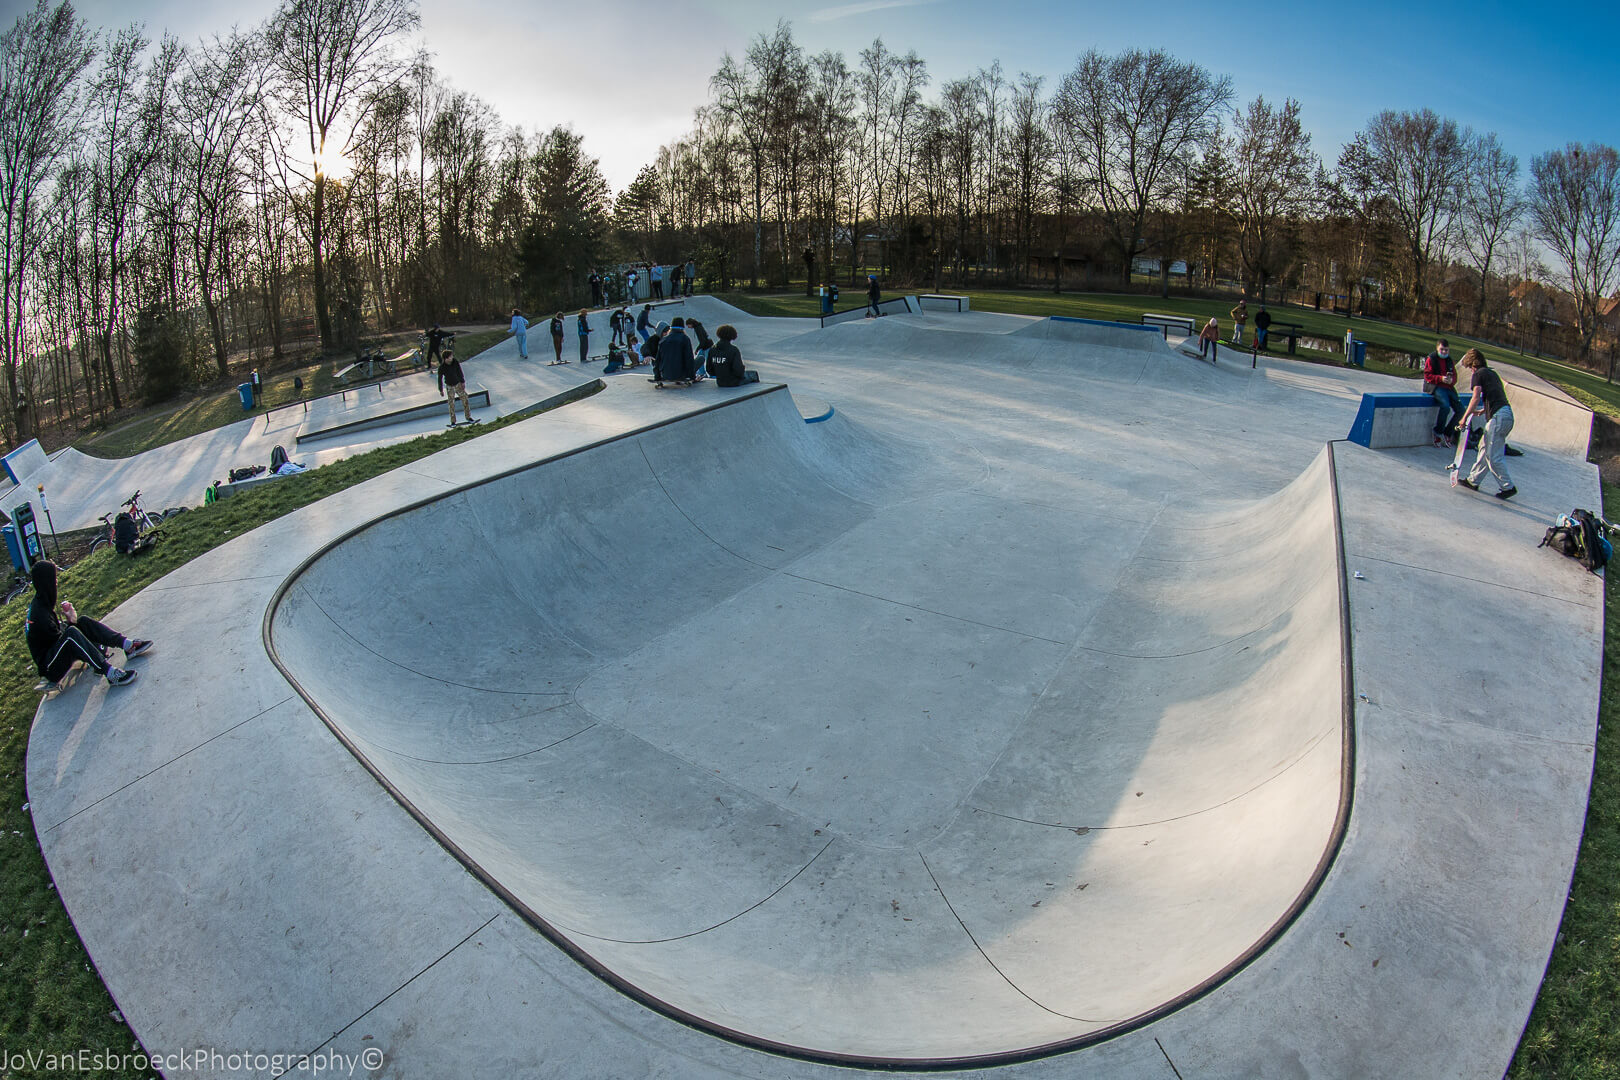 Hallaar skatepark